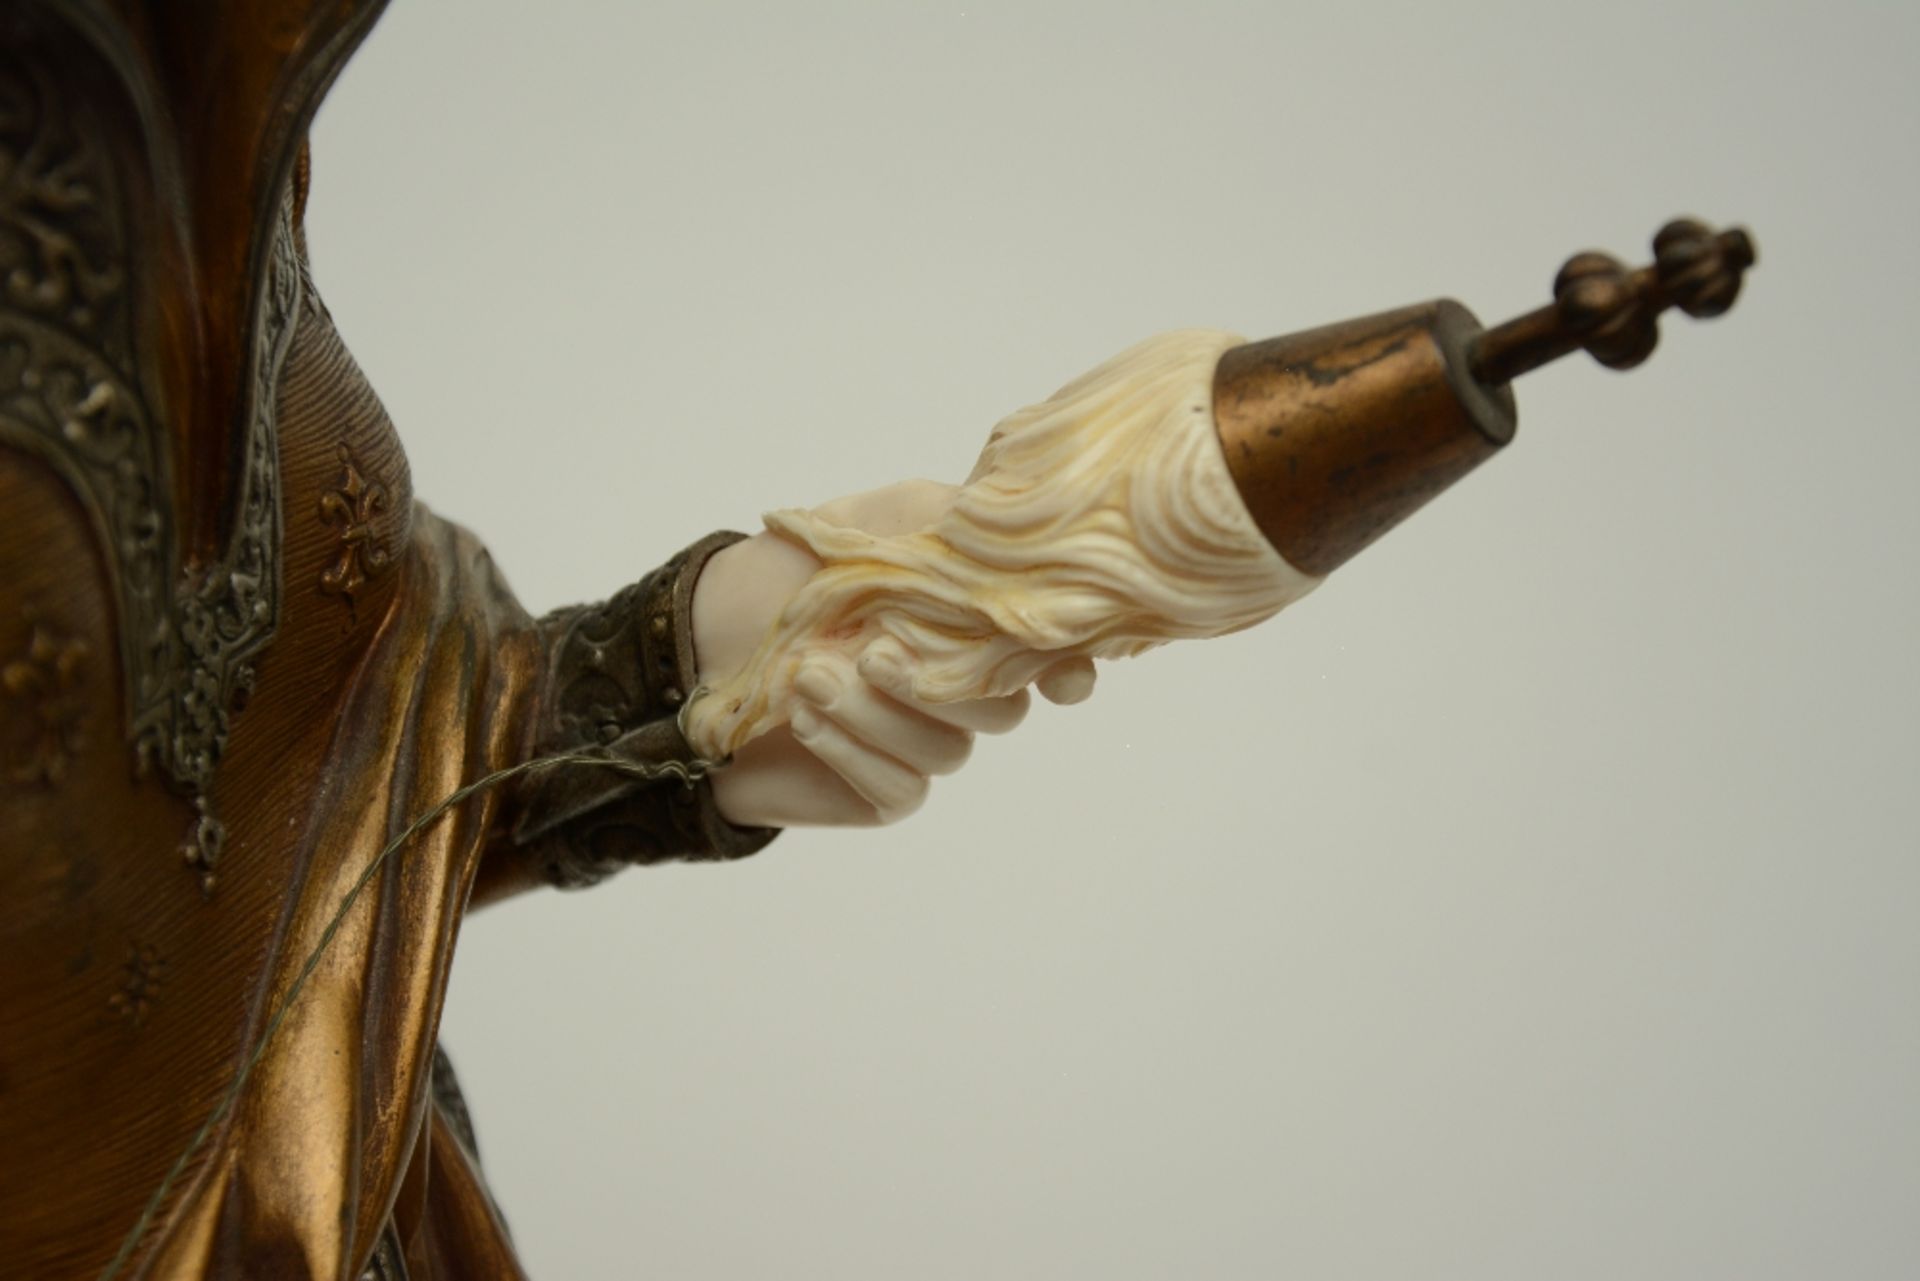 Carrier - Belleuse A., 'La Fileuse', chryselephantine statue, multiple patina, H 75,5 cm - Image 8 of 15